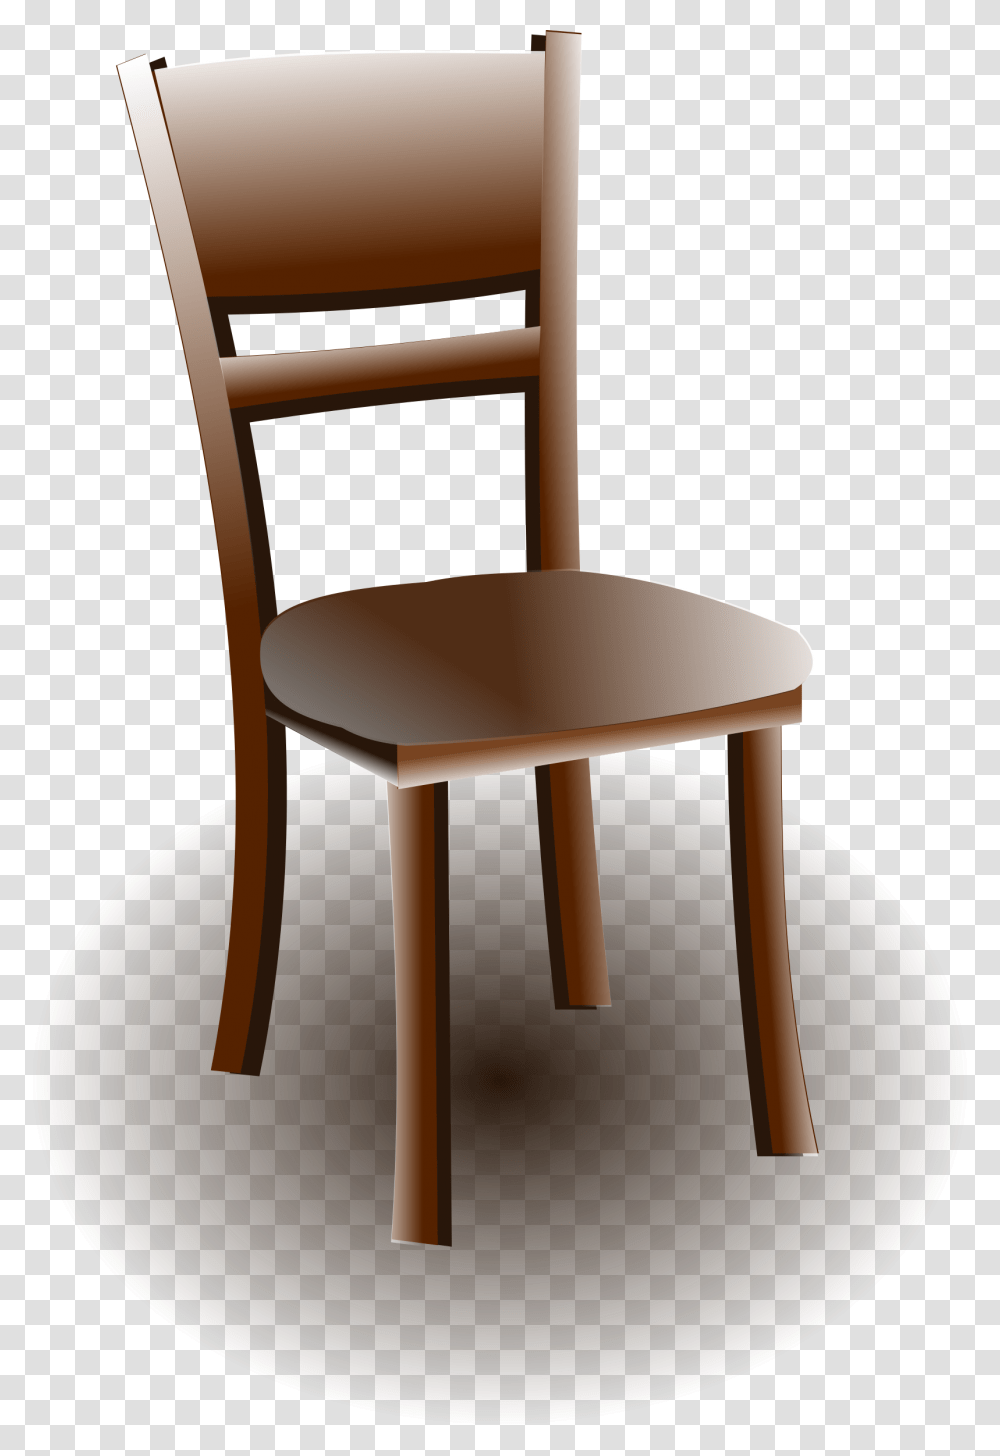 Wooden Chair Light Brown Chair Clipart Wooden Chair, Furniture, Lamp, Bar Stool Transparent Png